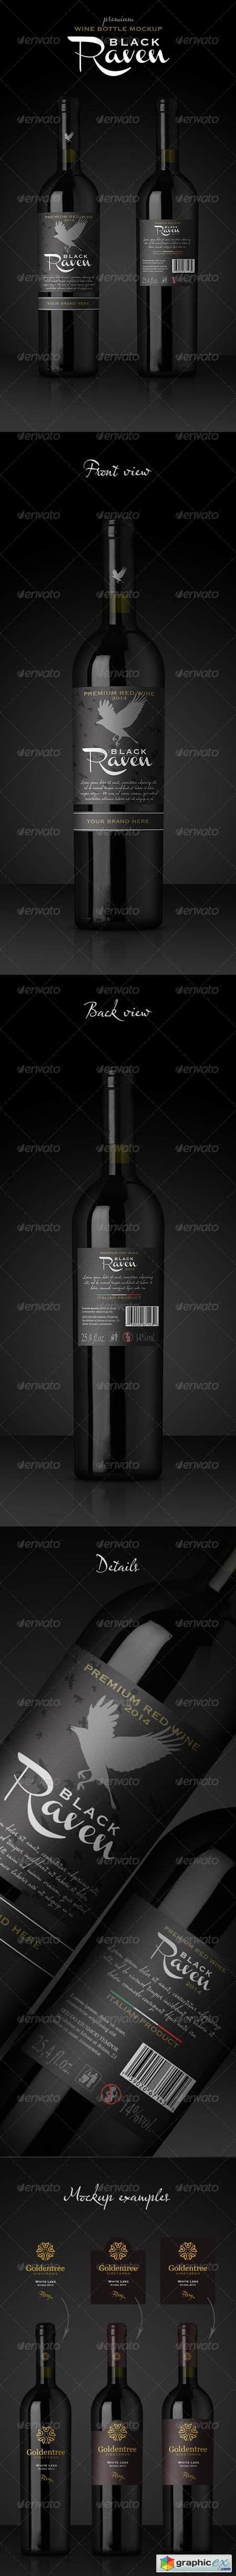 Premium Red Wine Mockup 6711653